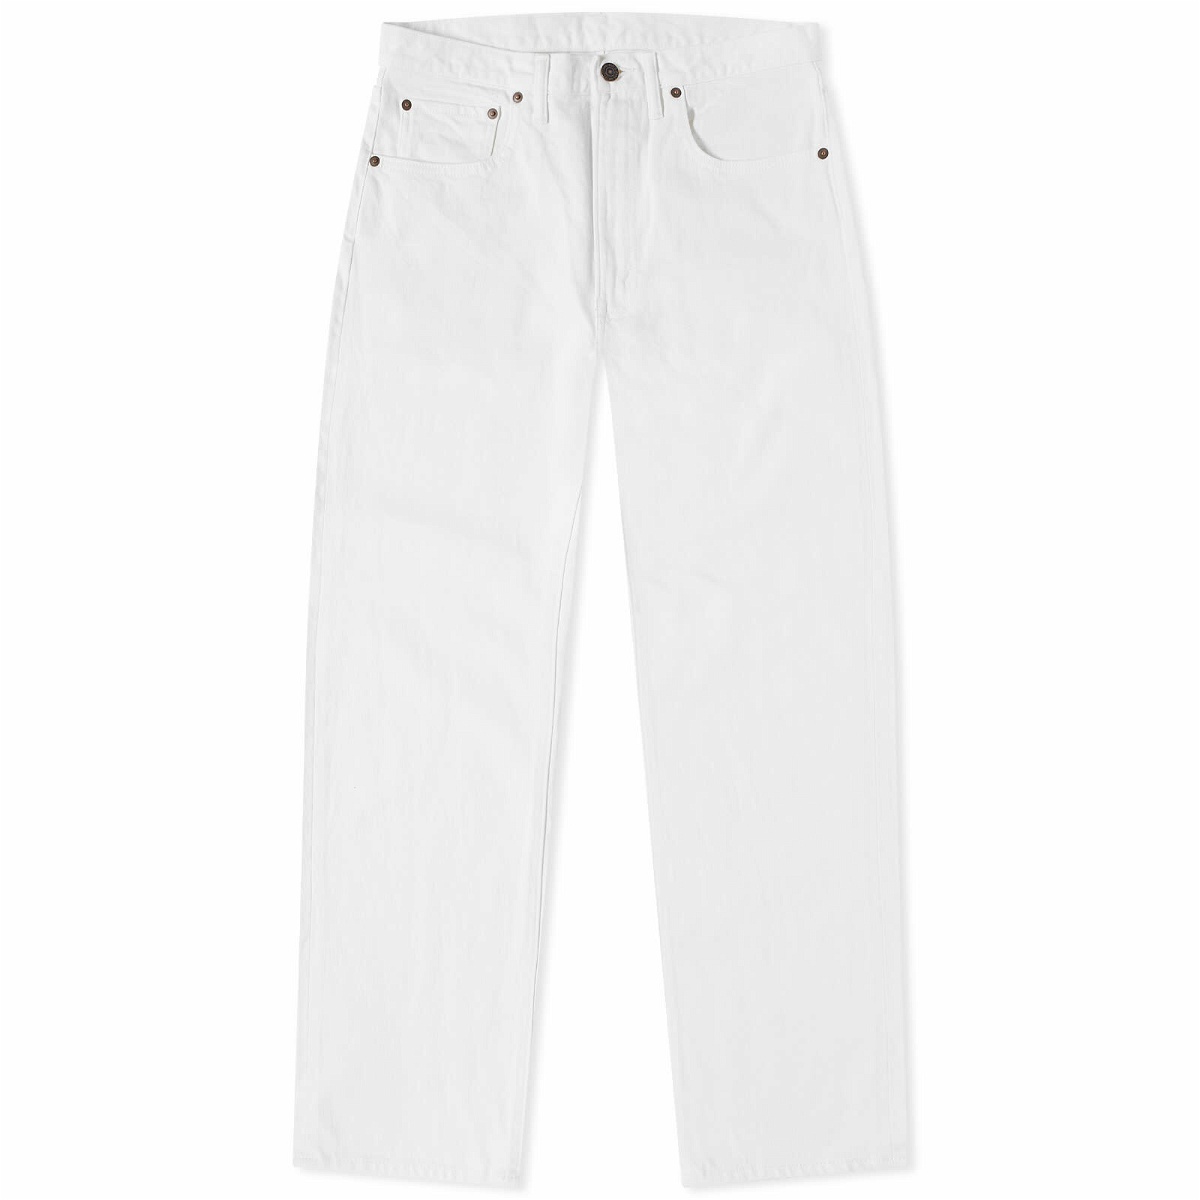 Beams Plus Men's 5 Pocket Denim Jean in White Beams Plus